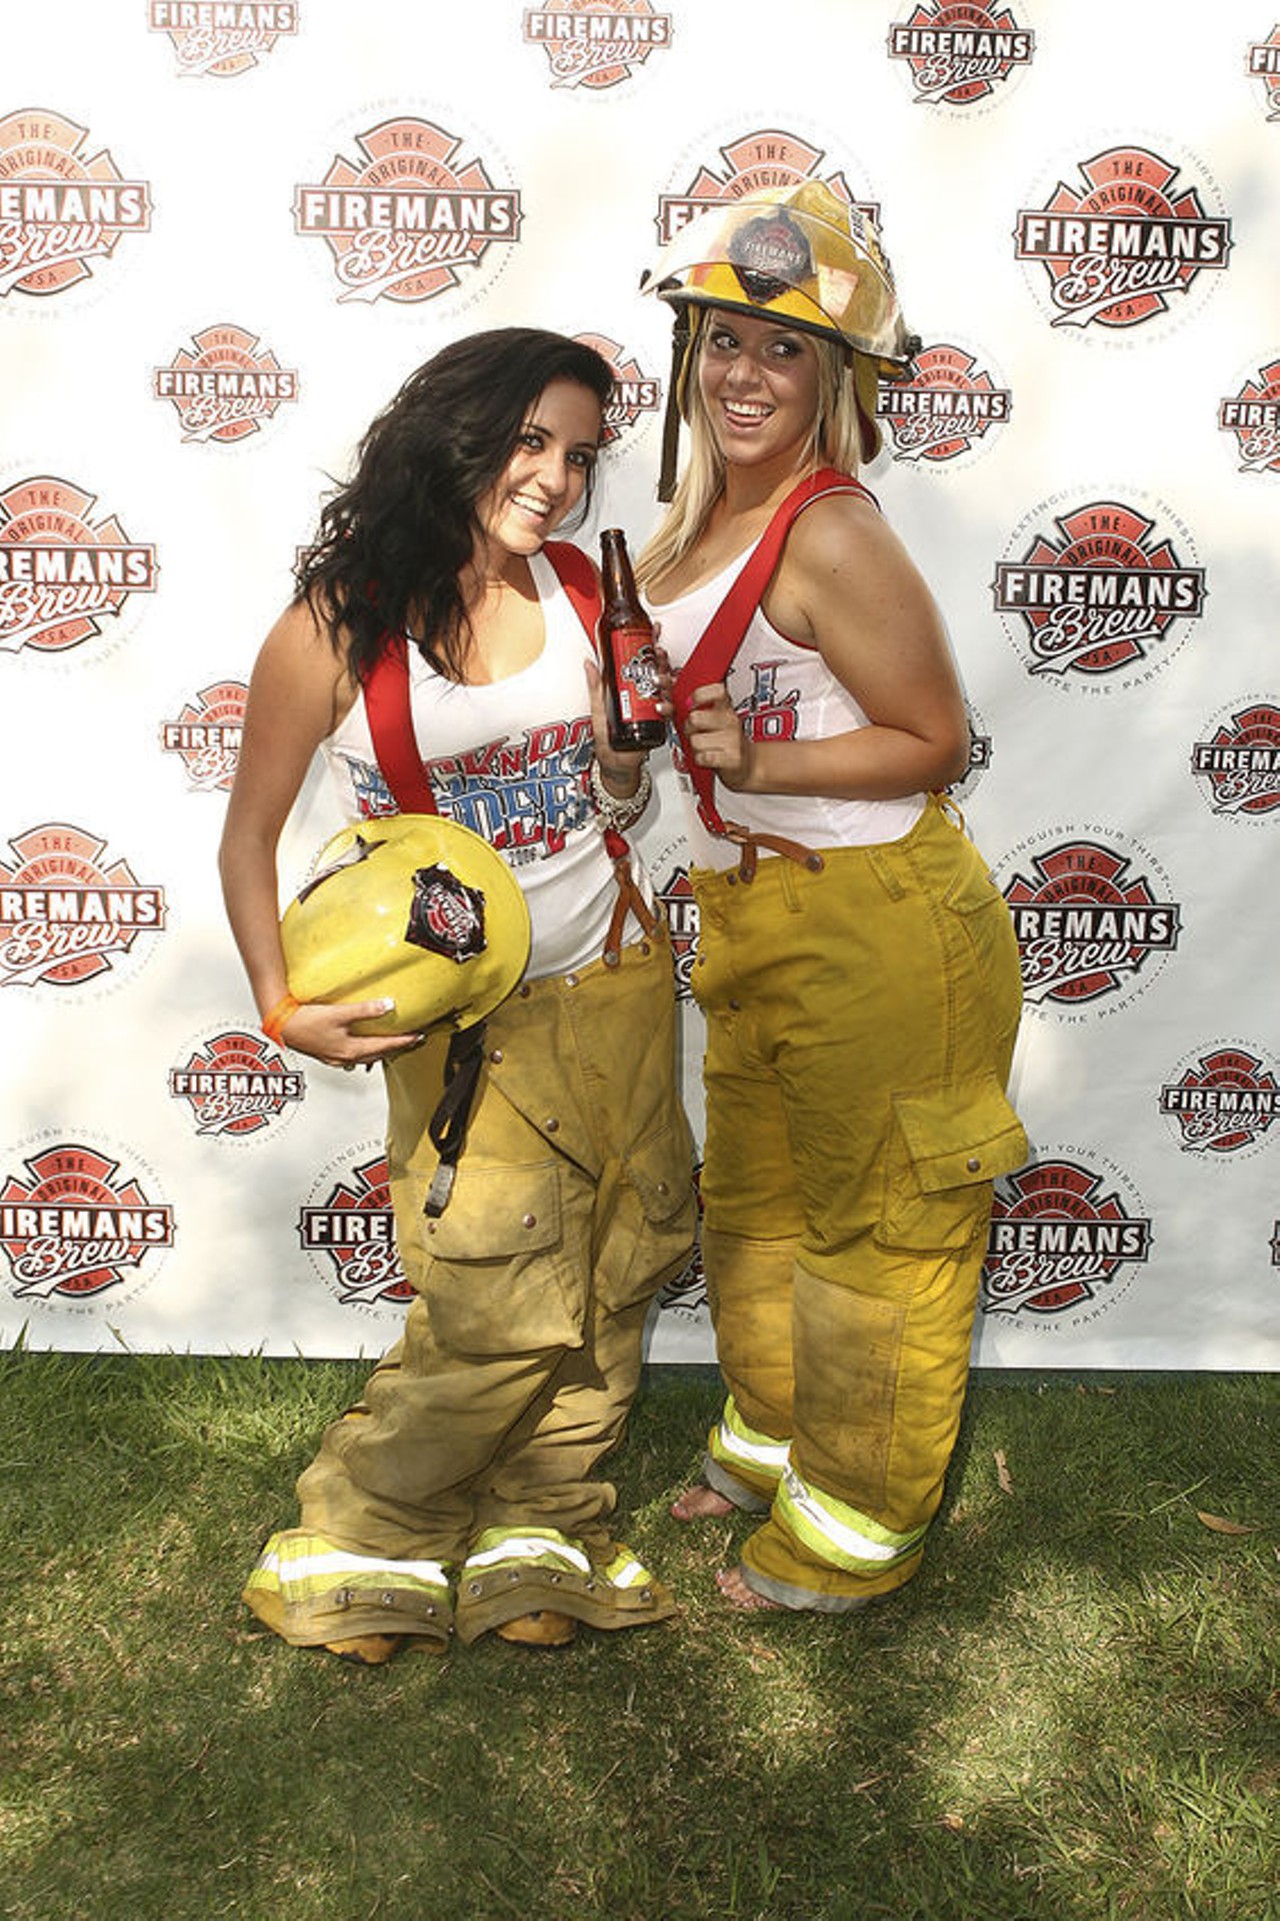 These firewomen at the Orange County Brew Ha Ha